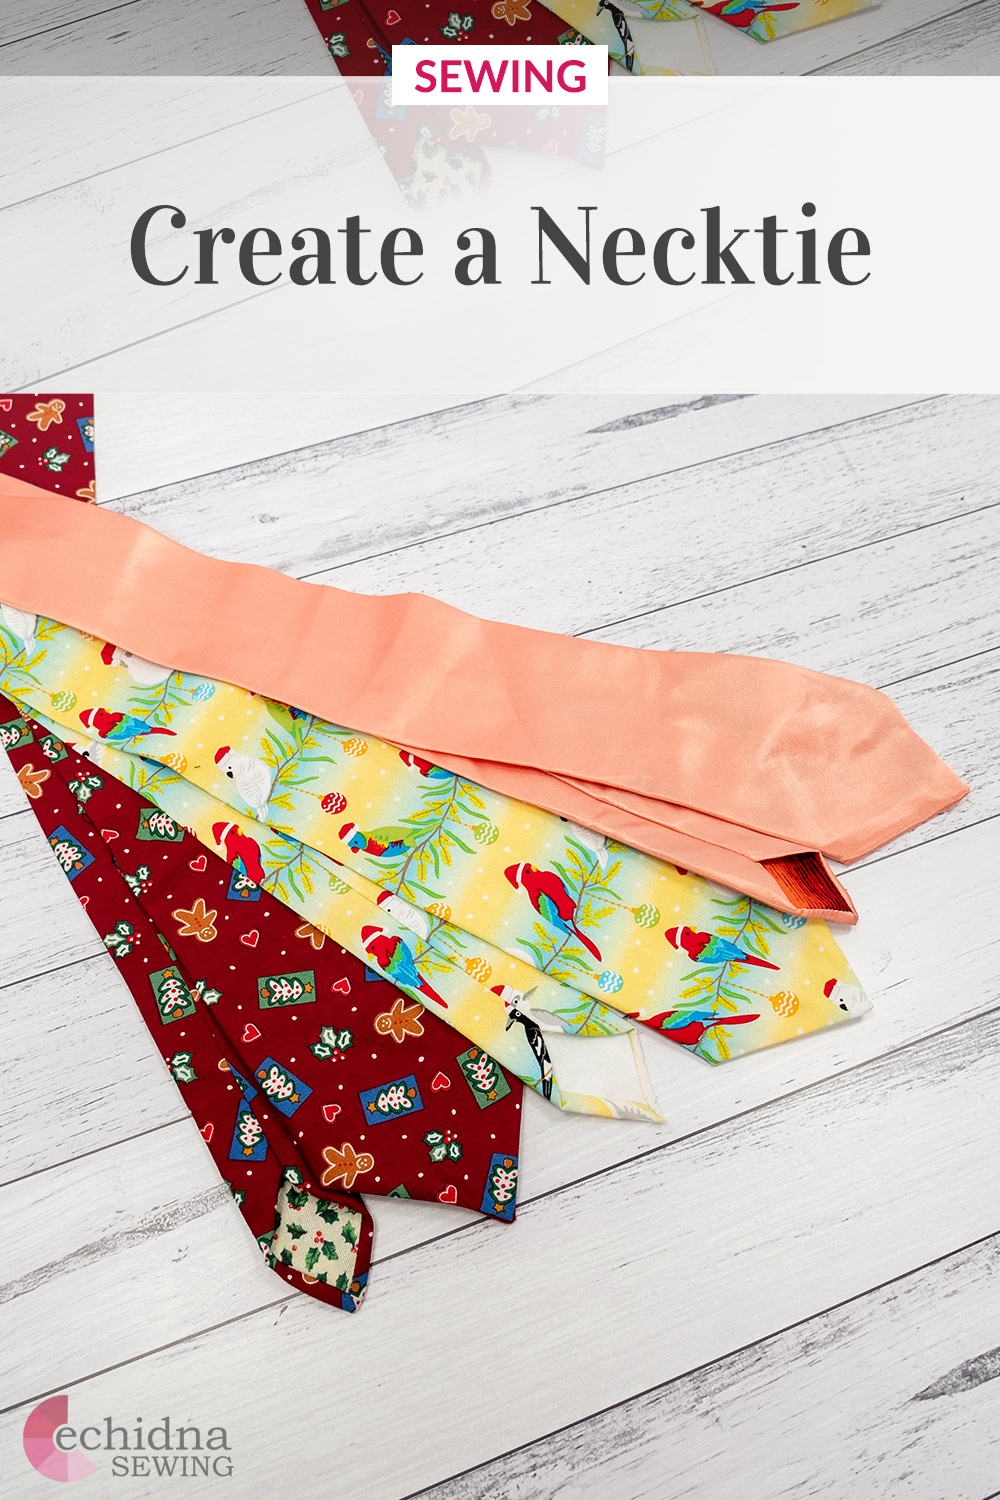 Necktie Project Pinterest